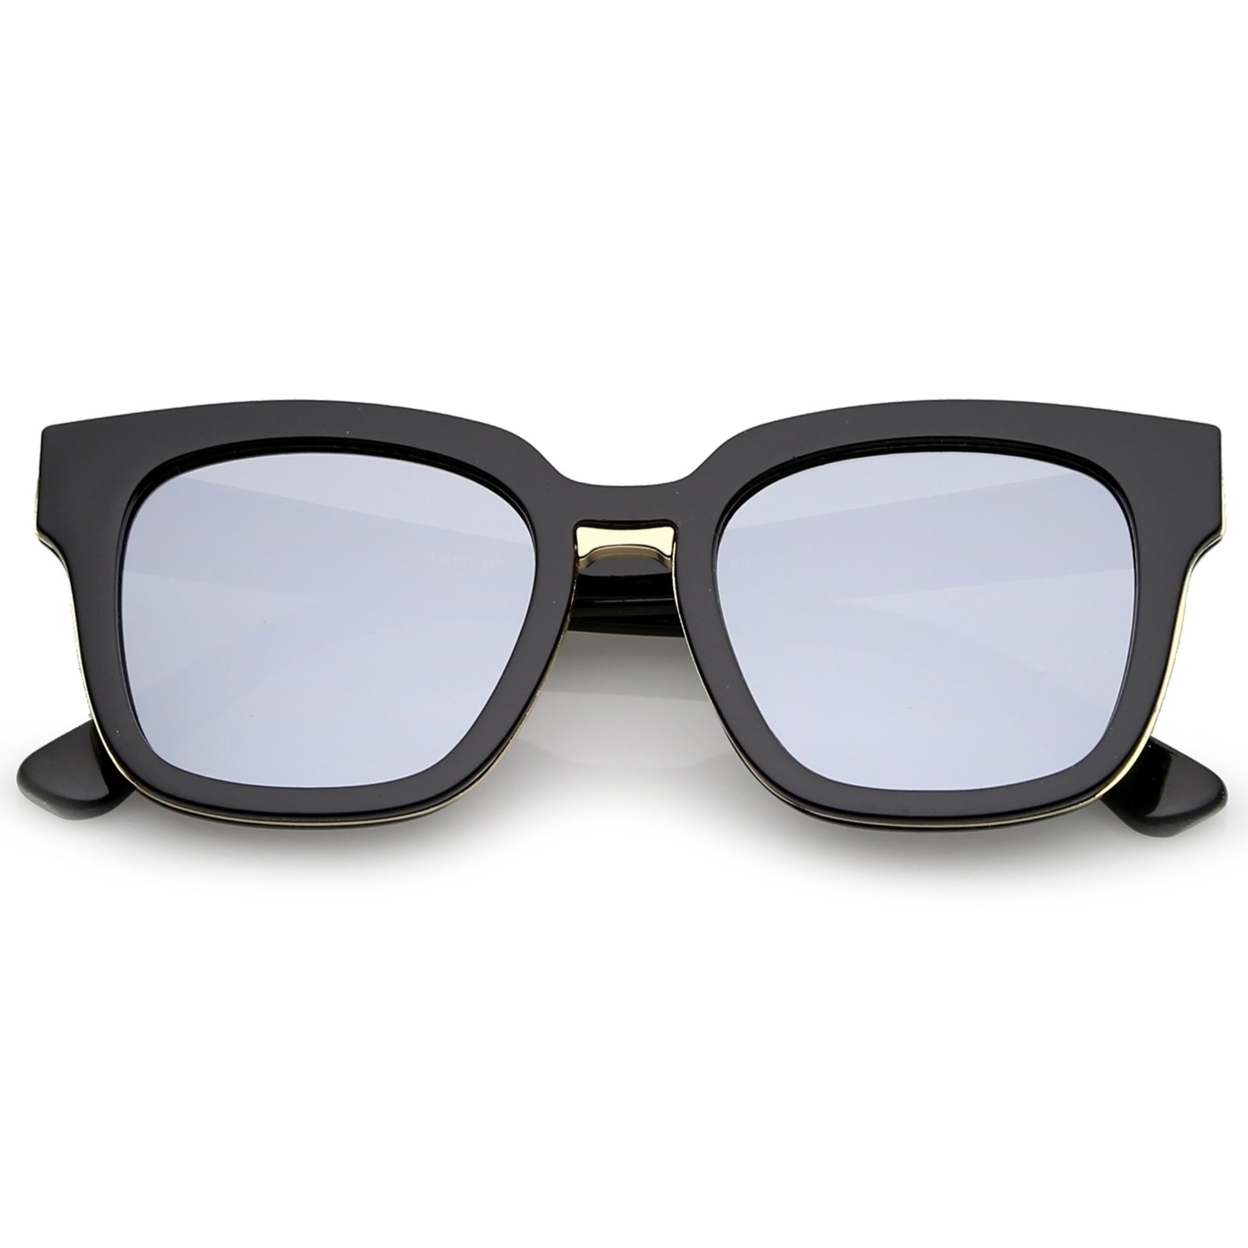 Modern Metal Trim Bridge Square Mirror Flat Lens Horn Rimmed Sunglasses 50mm - Tortoise-Gold / Blue Mirror